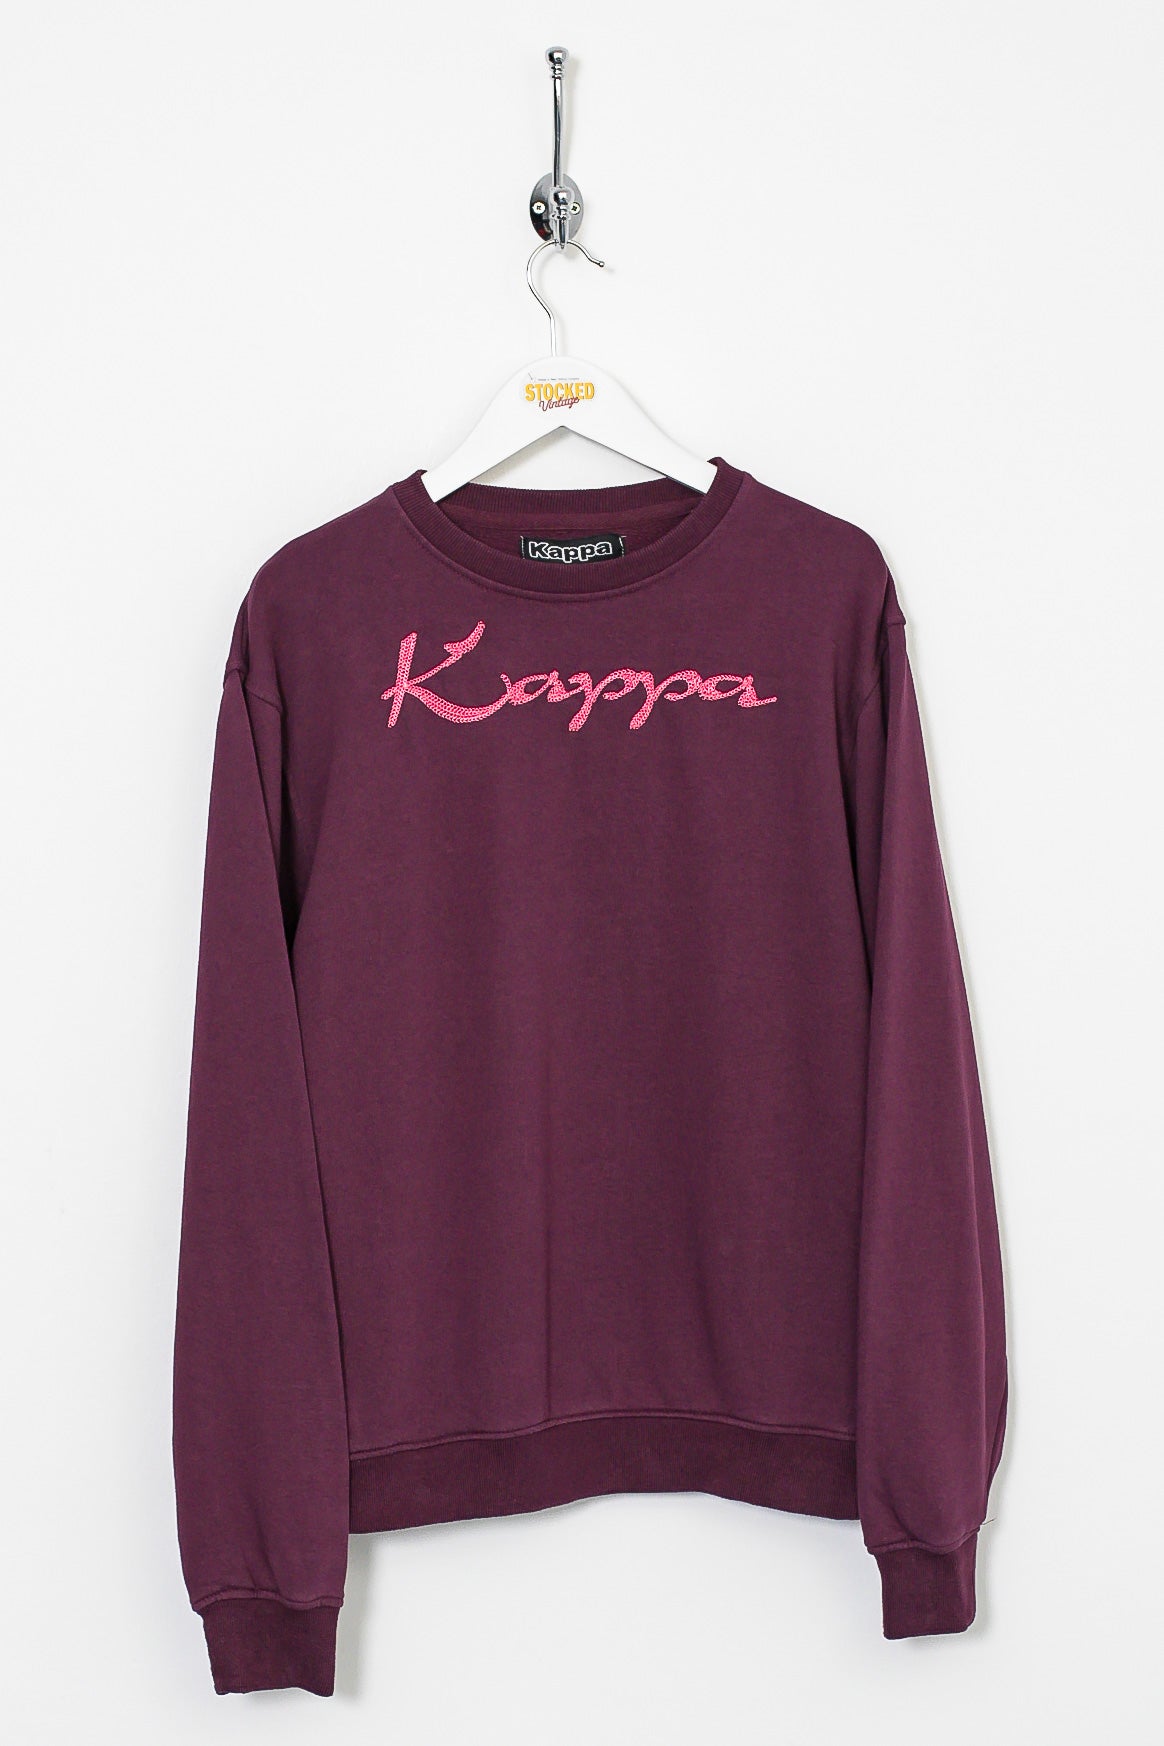 Kappa Sweatshirt (S)